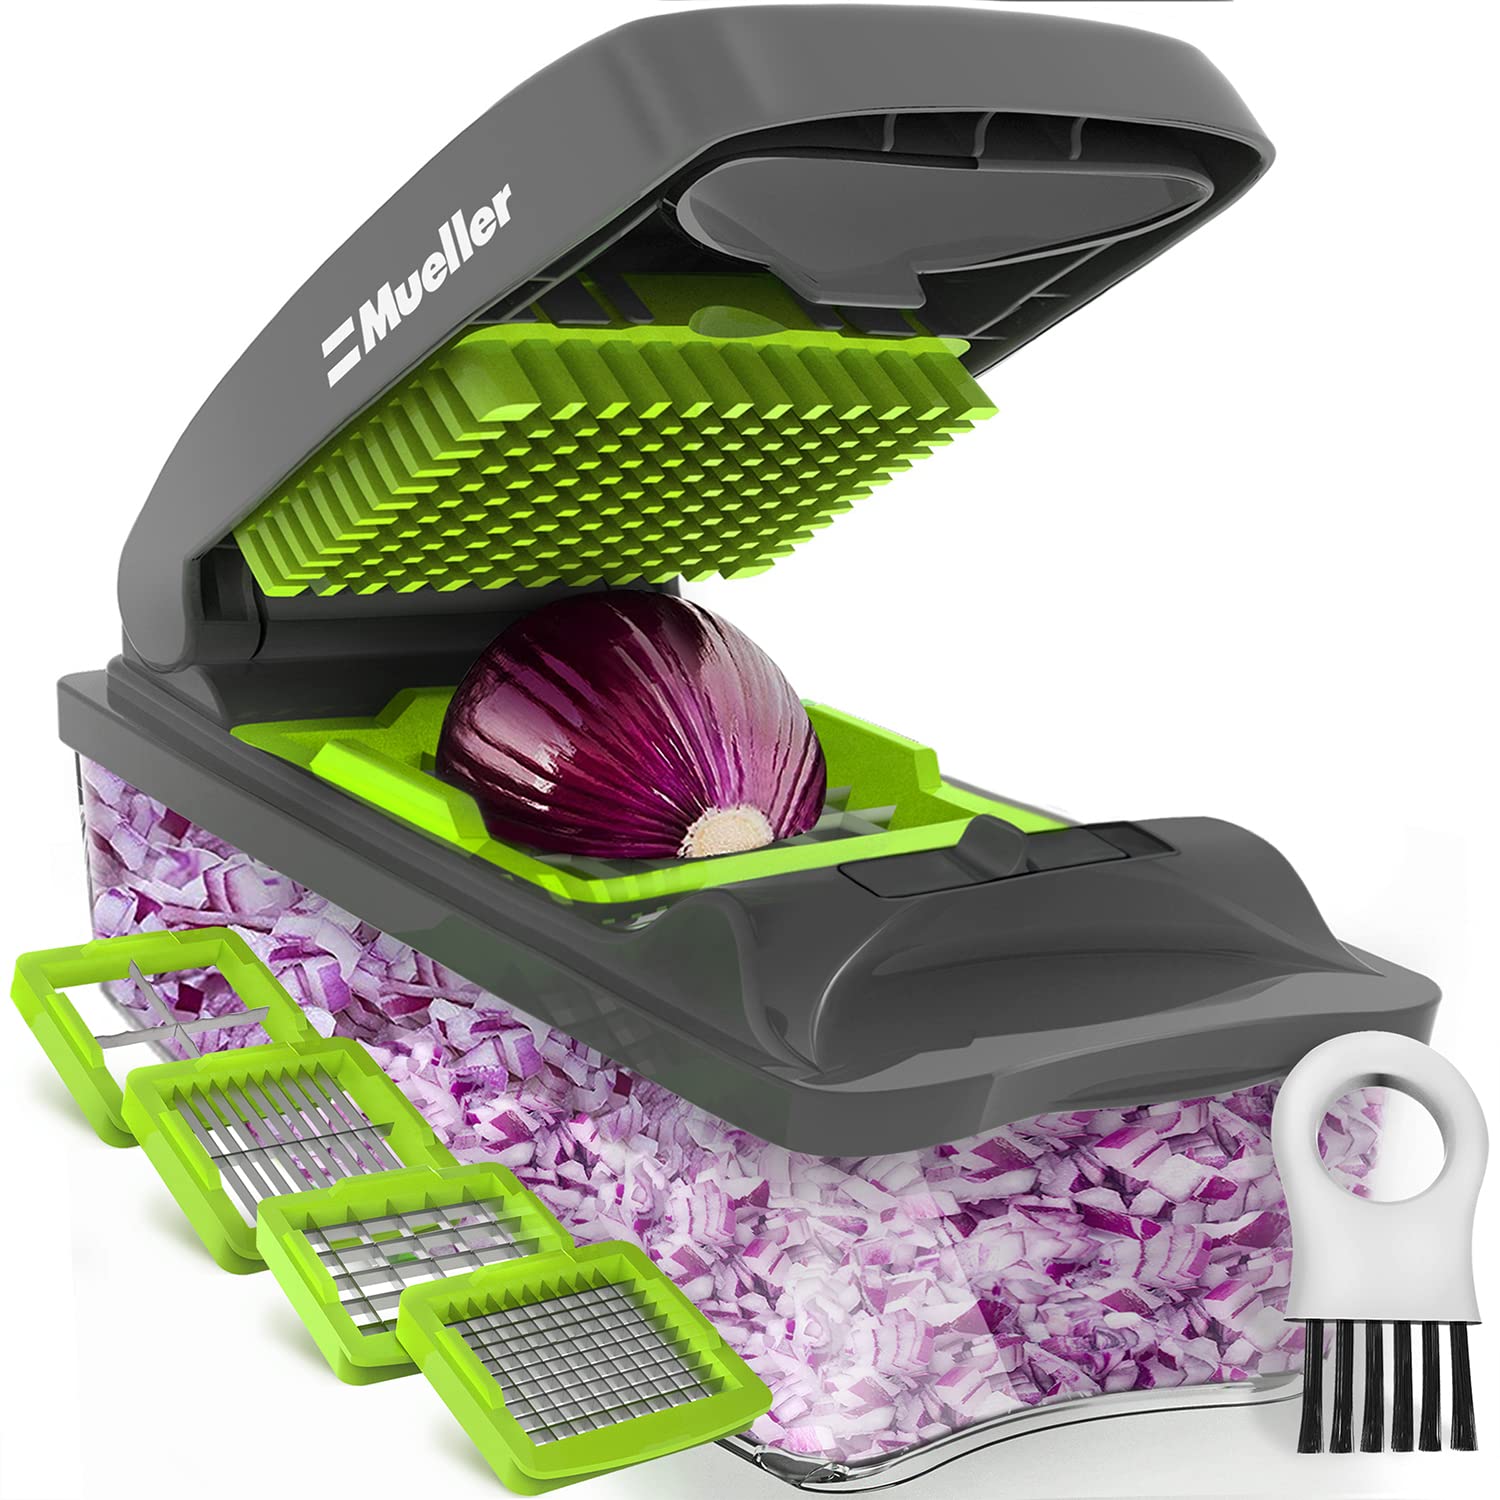 Mueller Onion Chopper 4 Blade Pro Series - Heavy Duty Multi Vegetable Fruit Cheese Chopper Dicer Kitchen Cutter